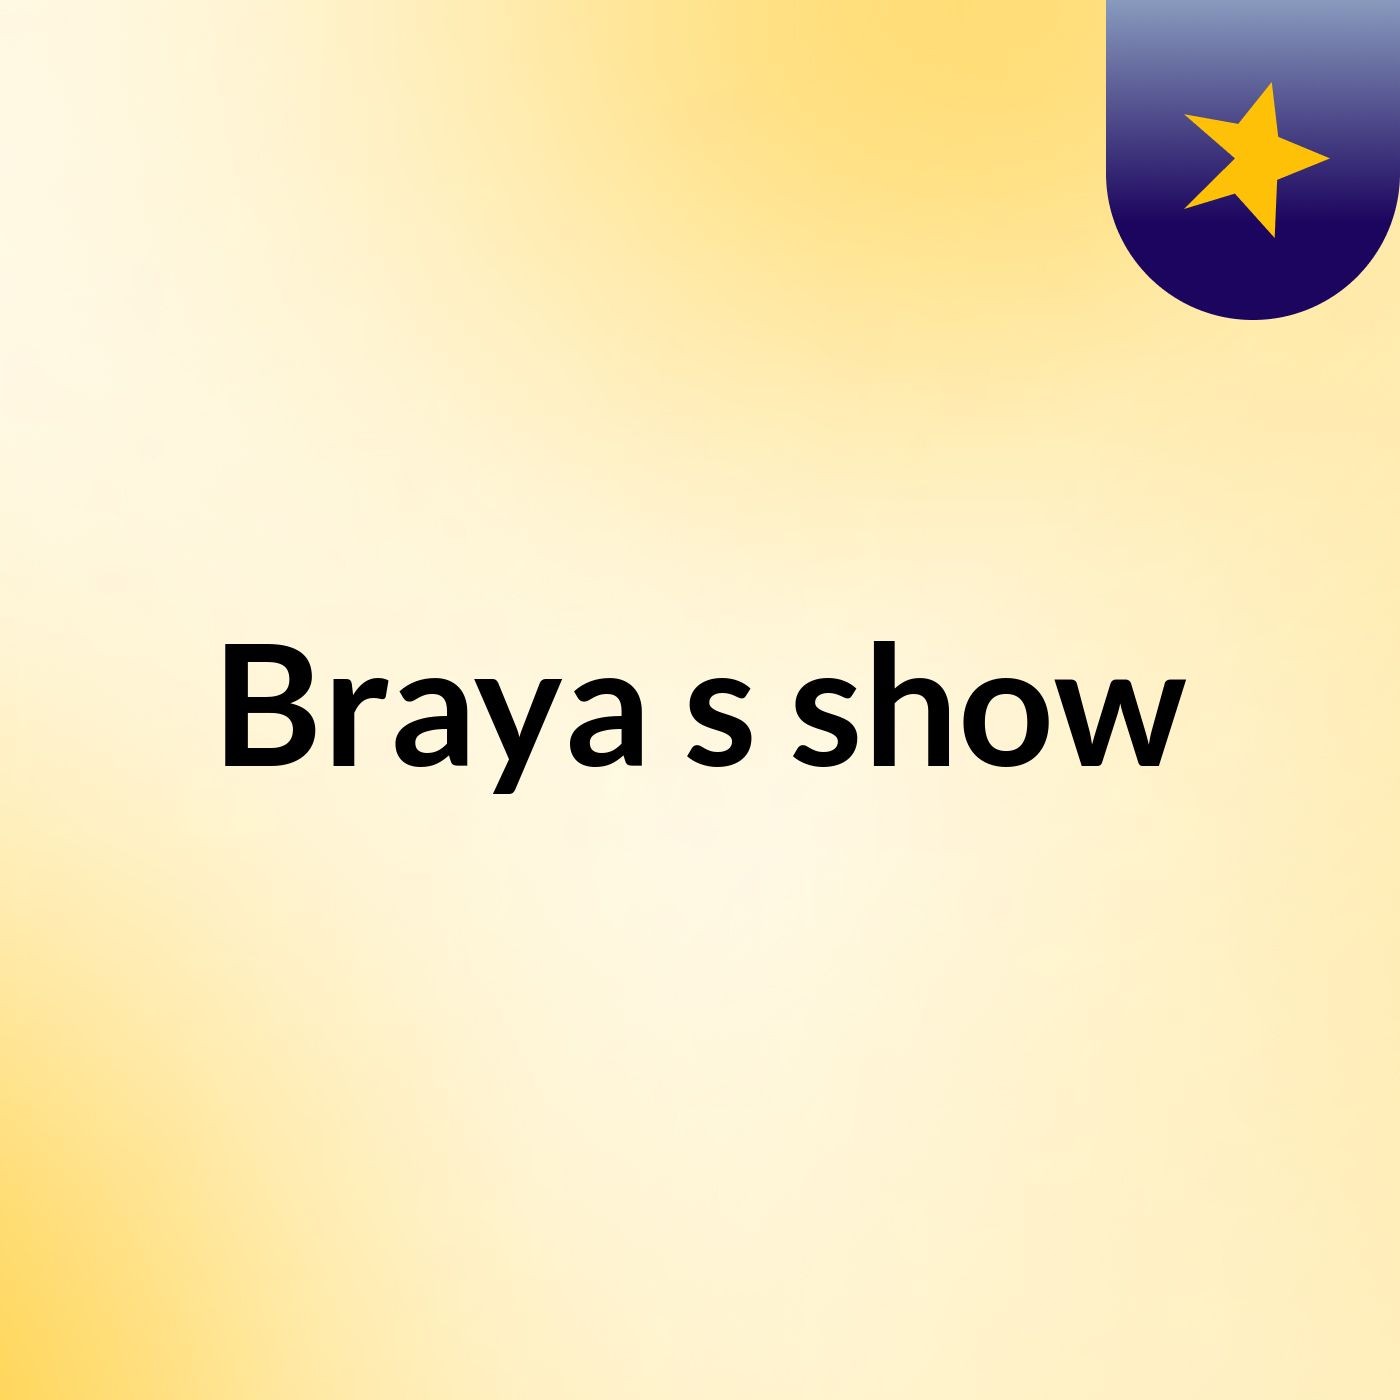 Braya's show